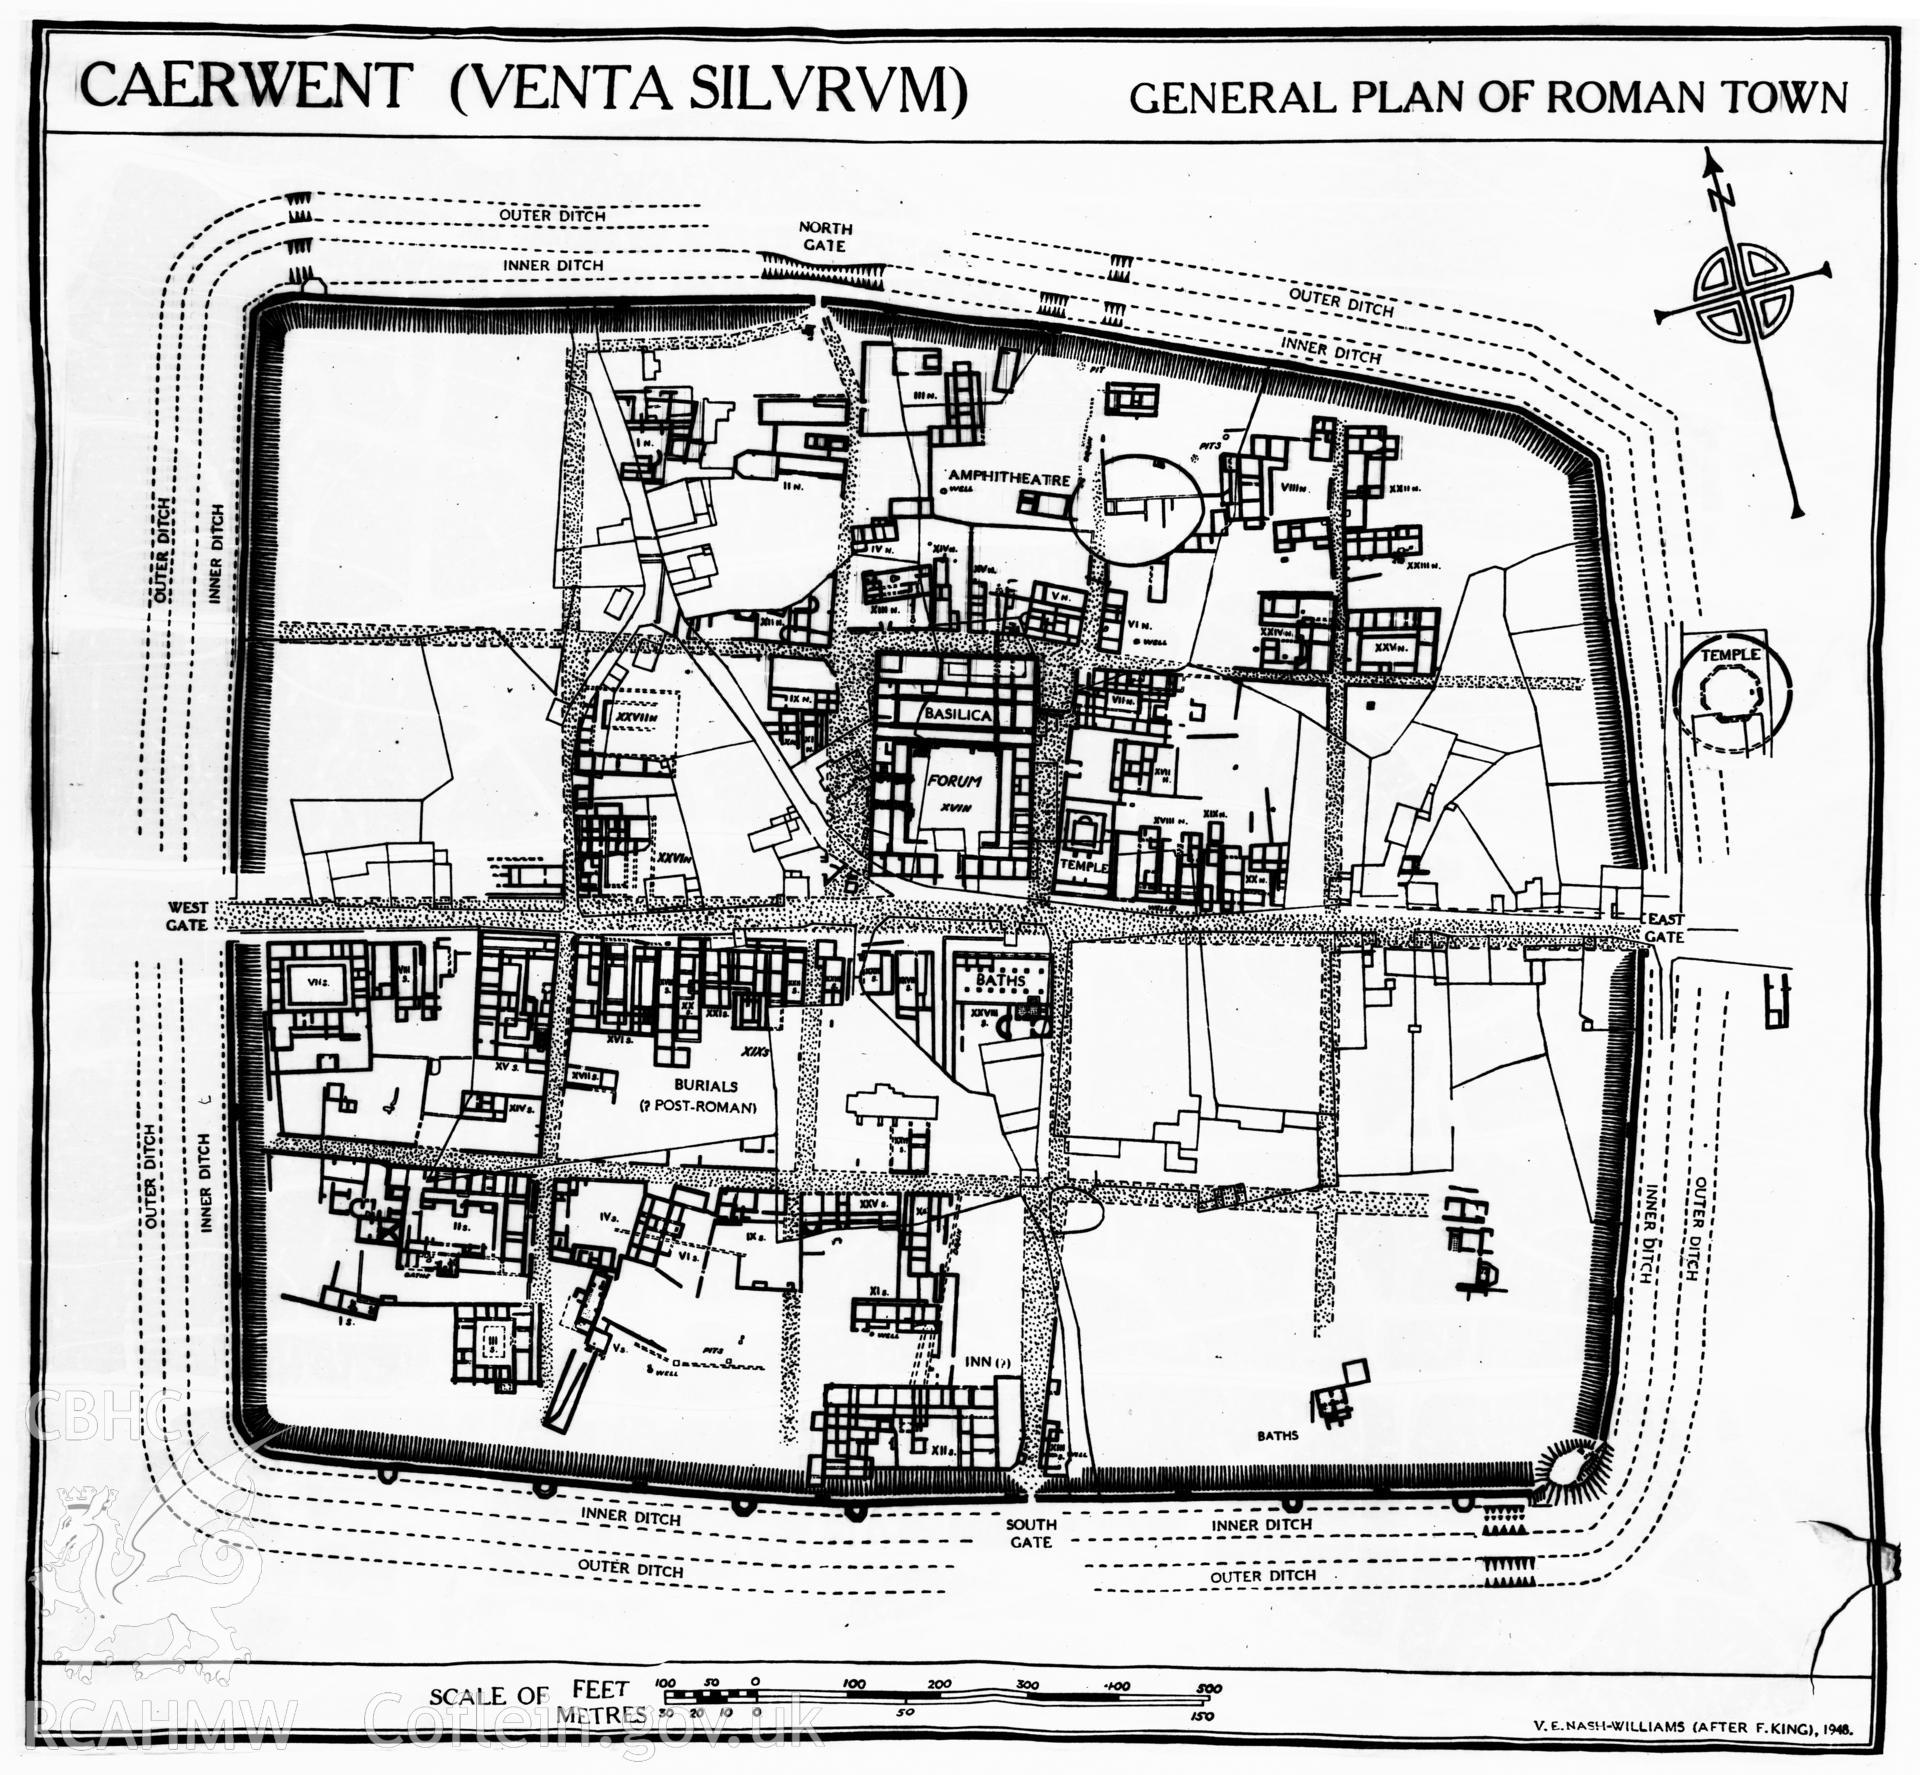 D.O.E photograph of Caerwent. Damaged neg., no prints.  P/c's made. Plan of Roman town.